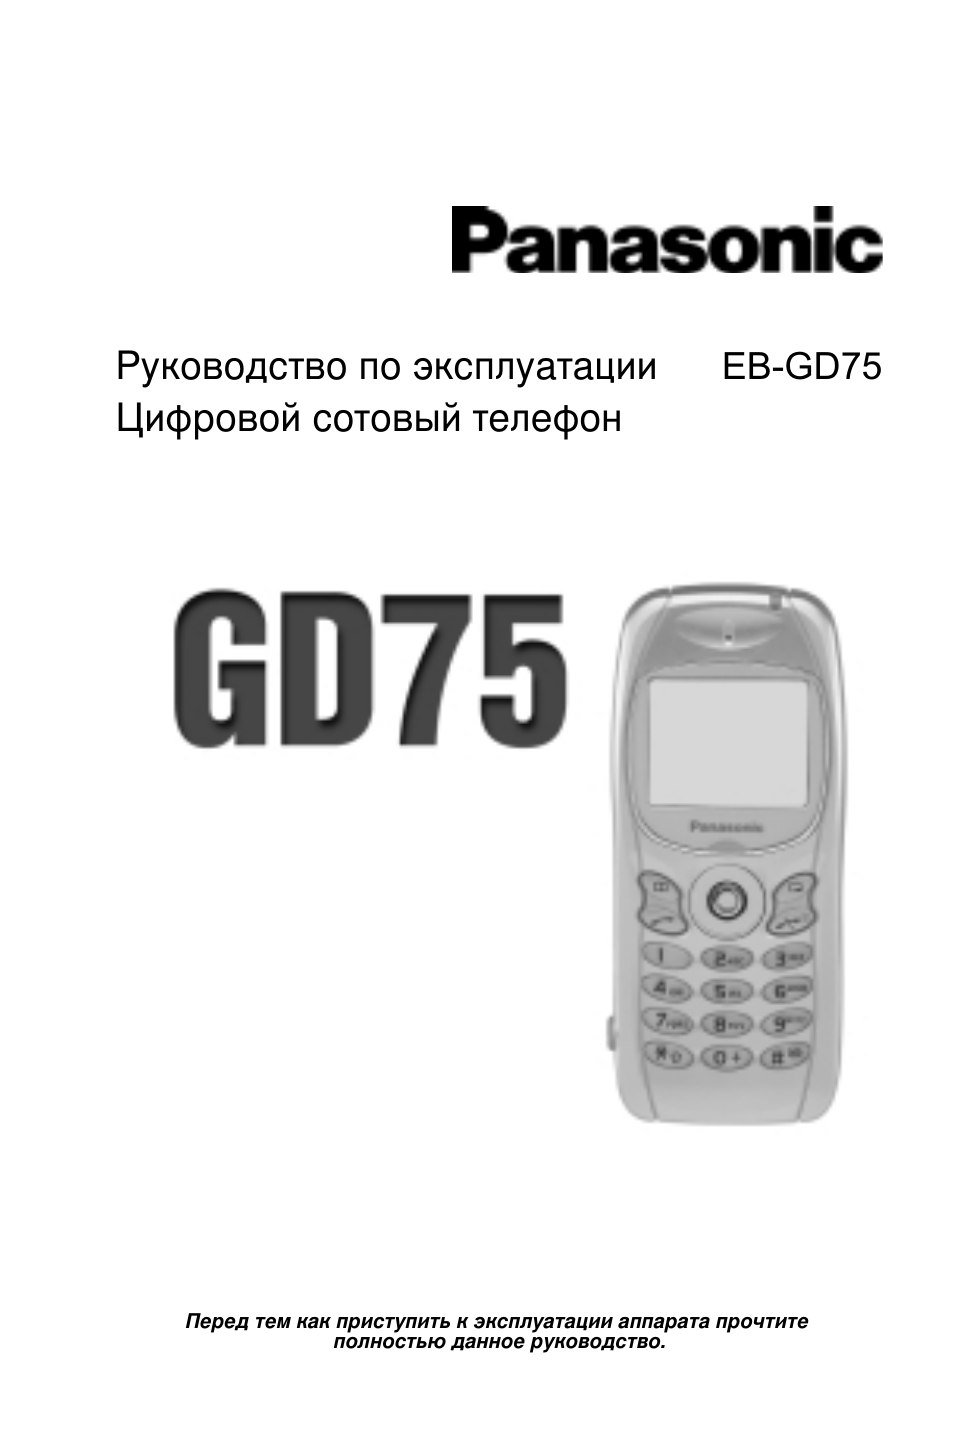 Инструкция по эксплуатации Panasonic EB-GD75  RU | 76 страниц